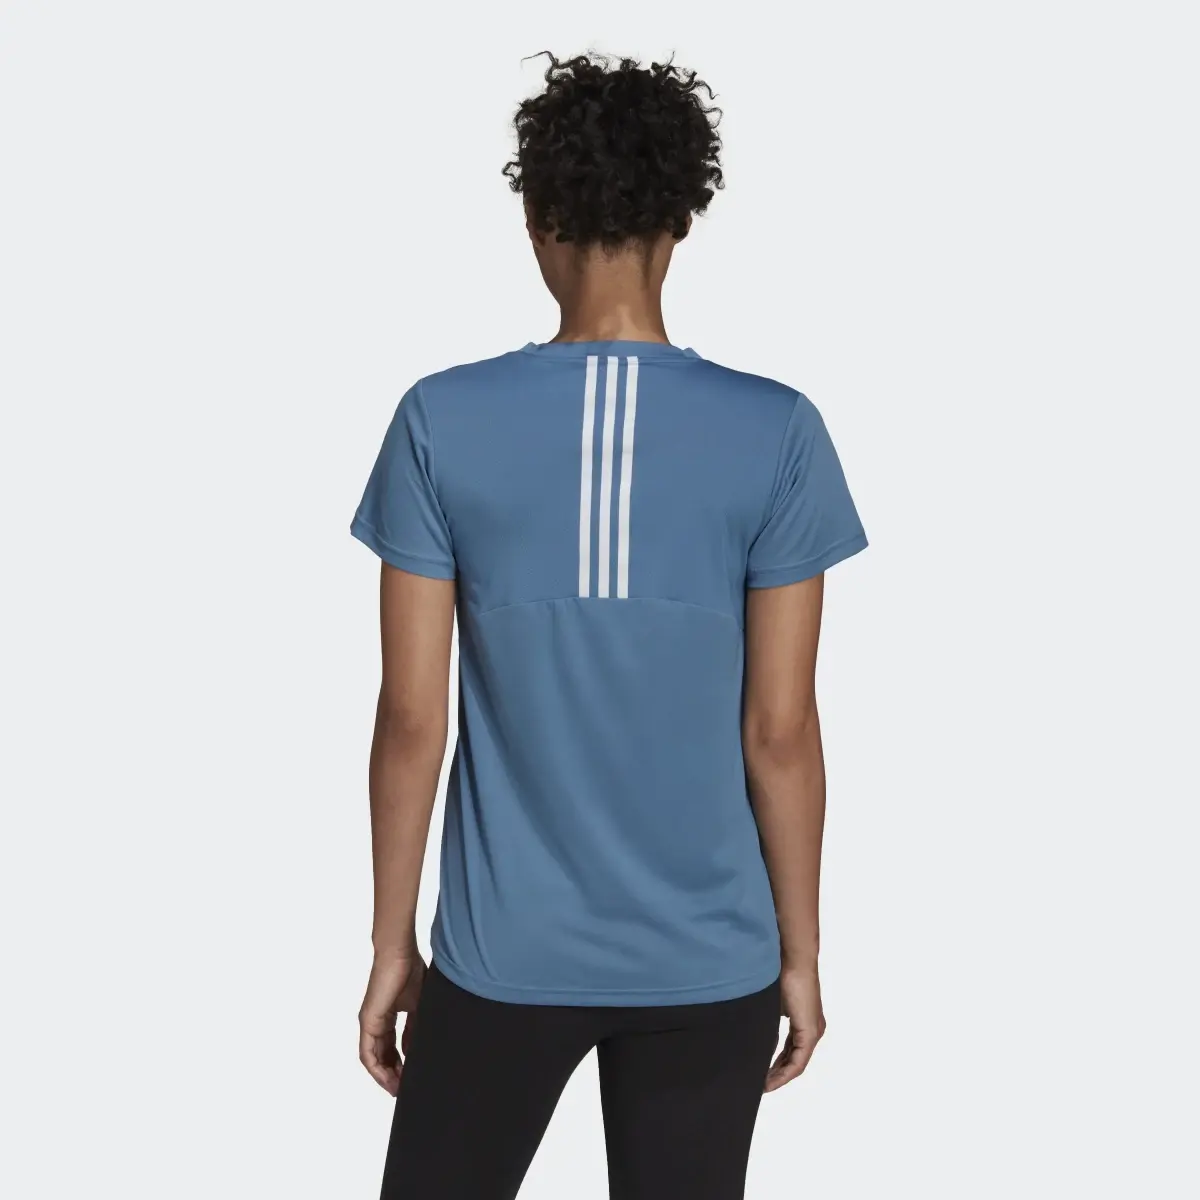 Adidas AEROREADY Designed 2 Move 3-Stripes Sport T-Shirt. 3